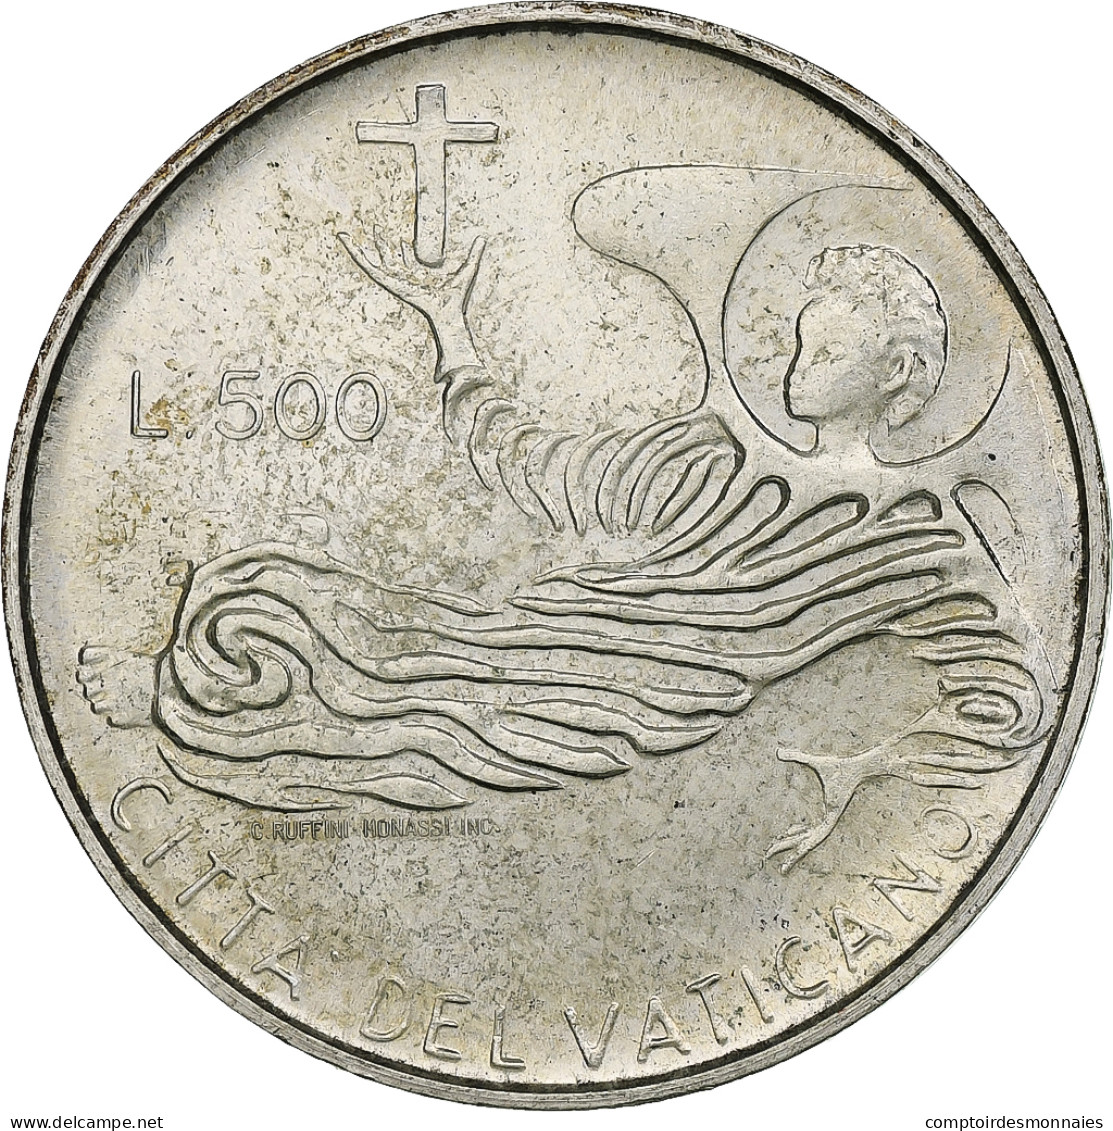 Vatican, Paul VI, 500 Lire, 1969 - Anno VII, Rome, Argent, SPL+, KM:115 - Vatican